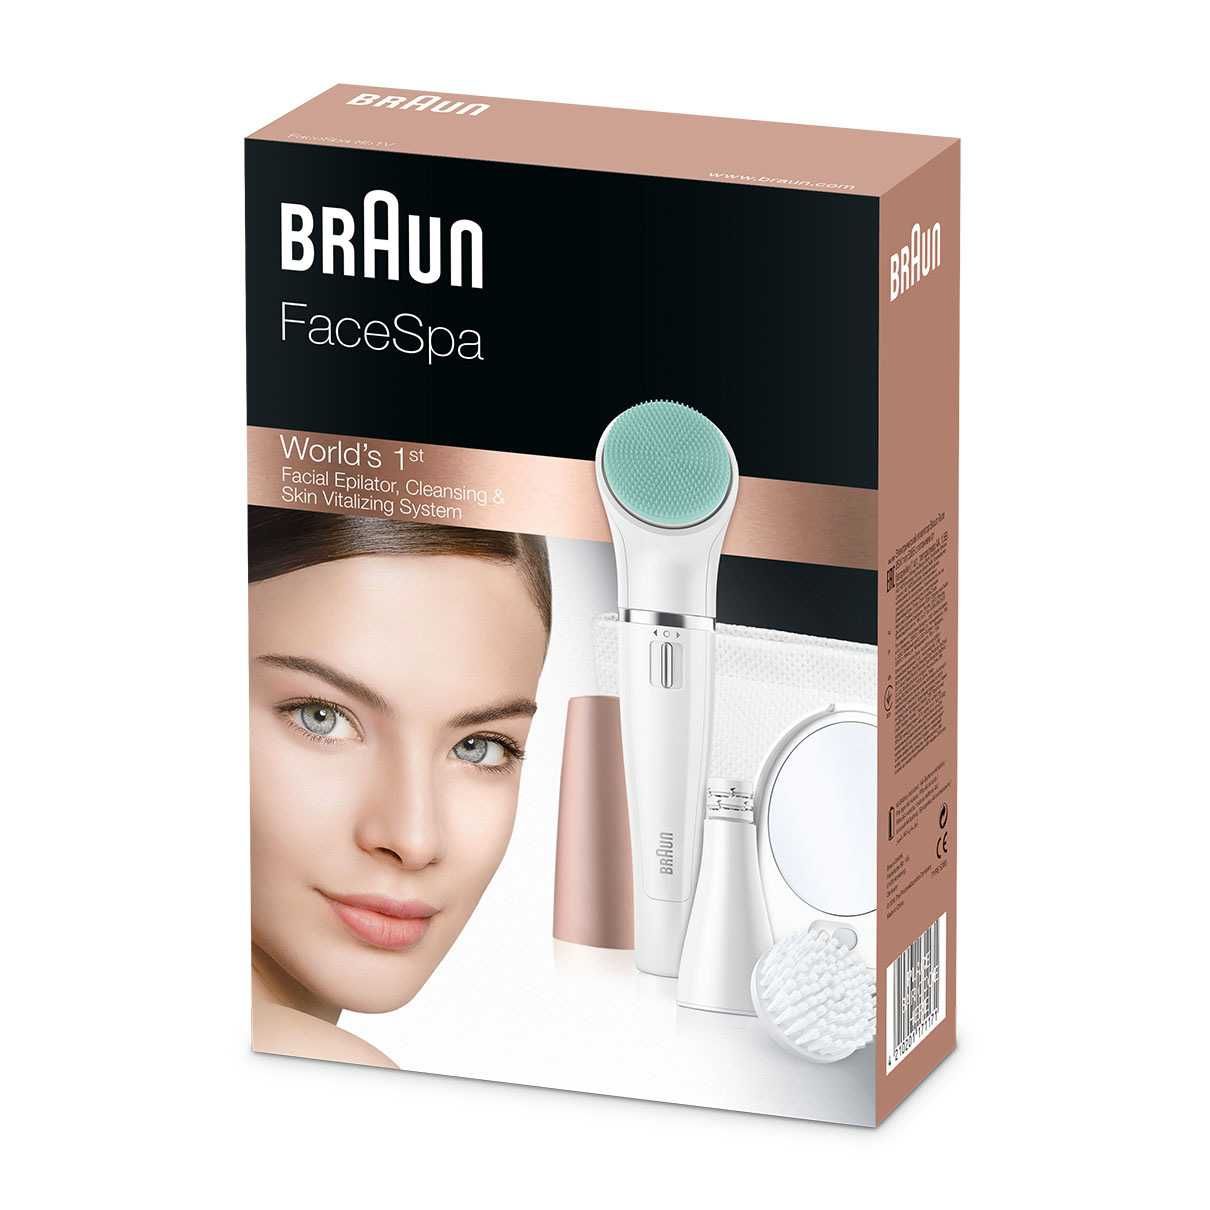 Braun FaceSpa Facial Epilator Handle ONLY (5365)